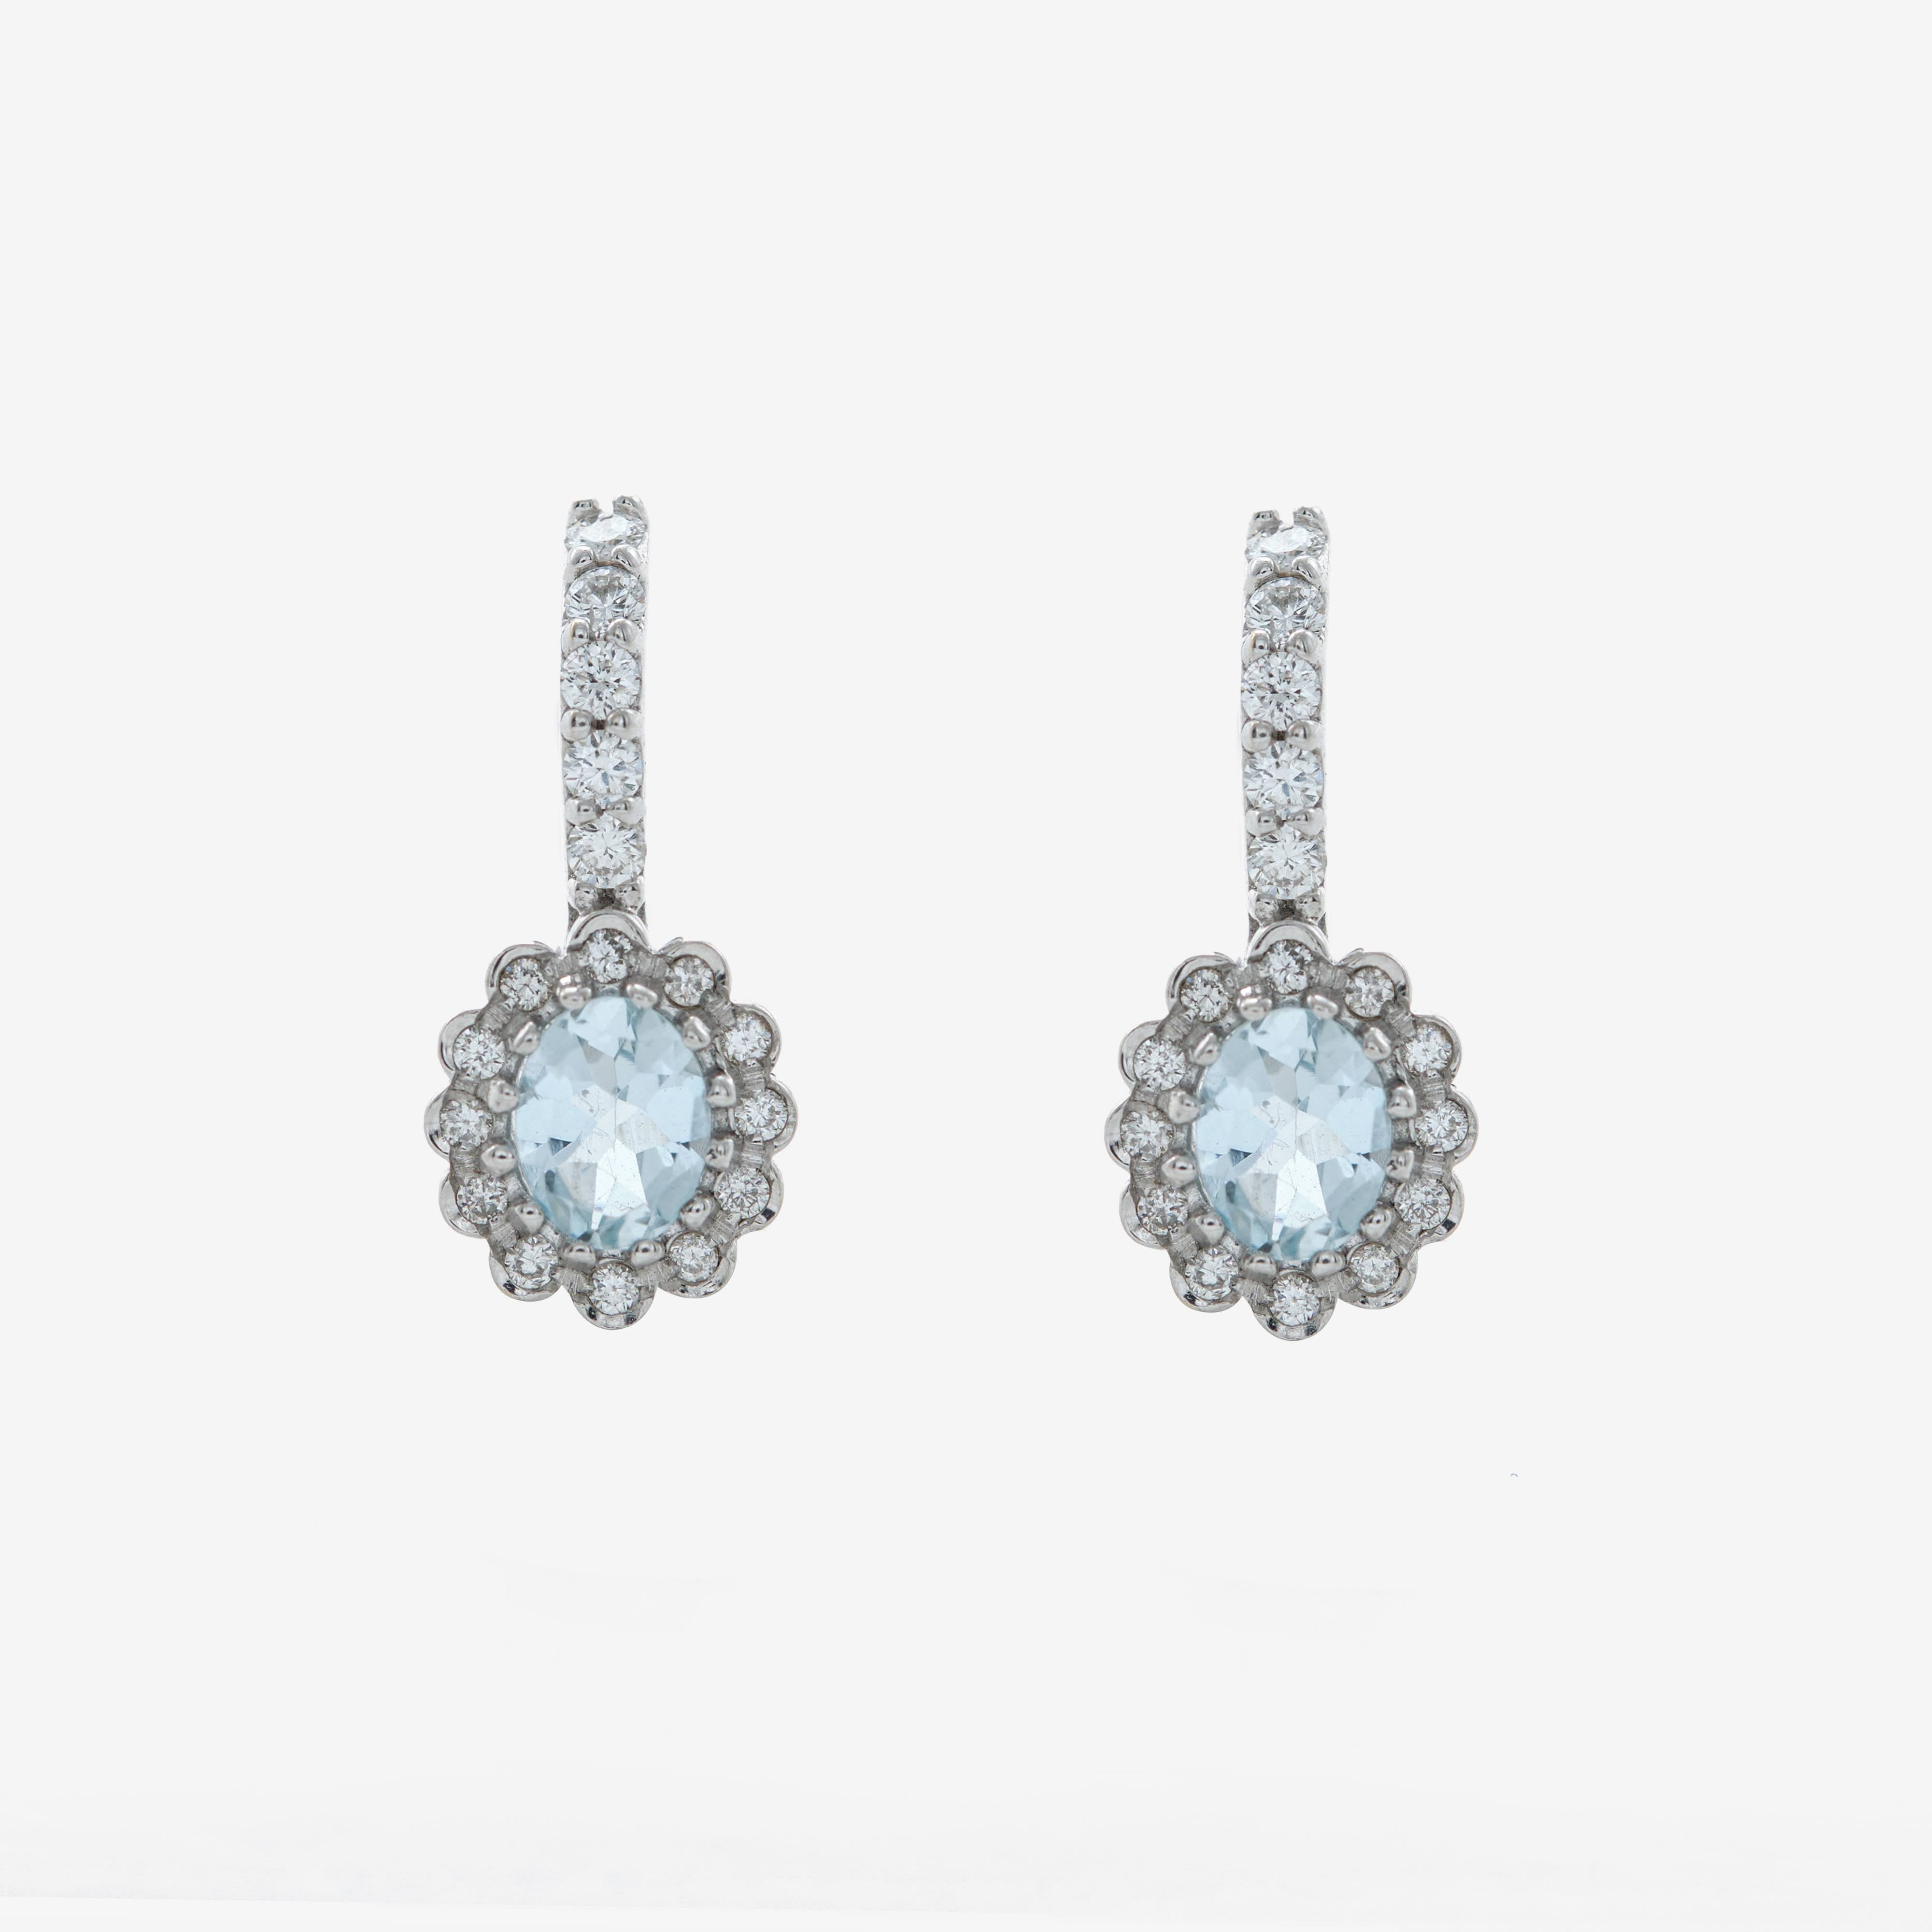 Divya earrings with aquamarine and diamonds